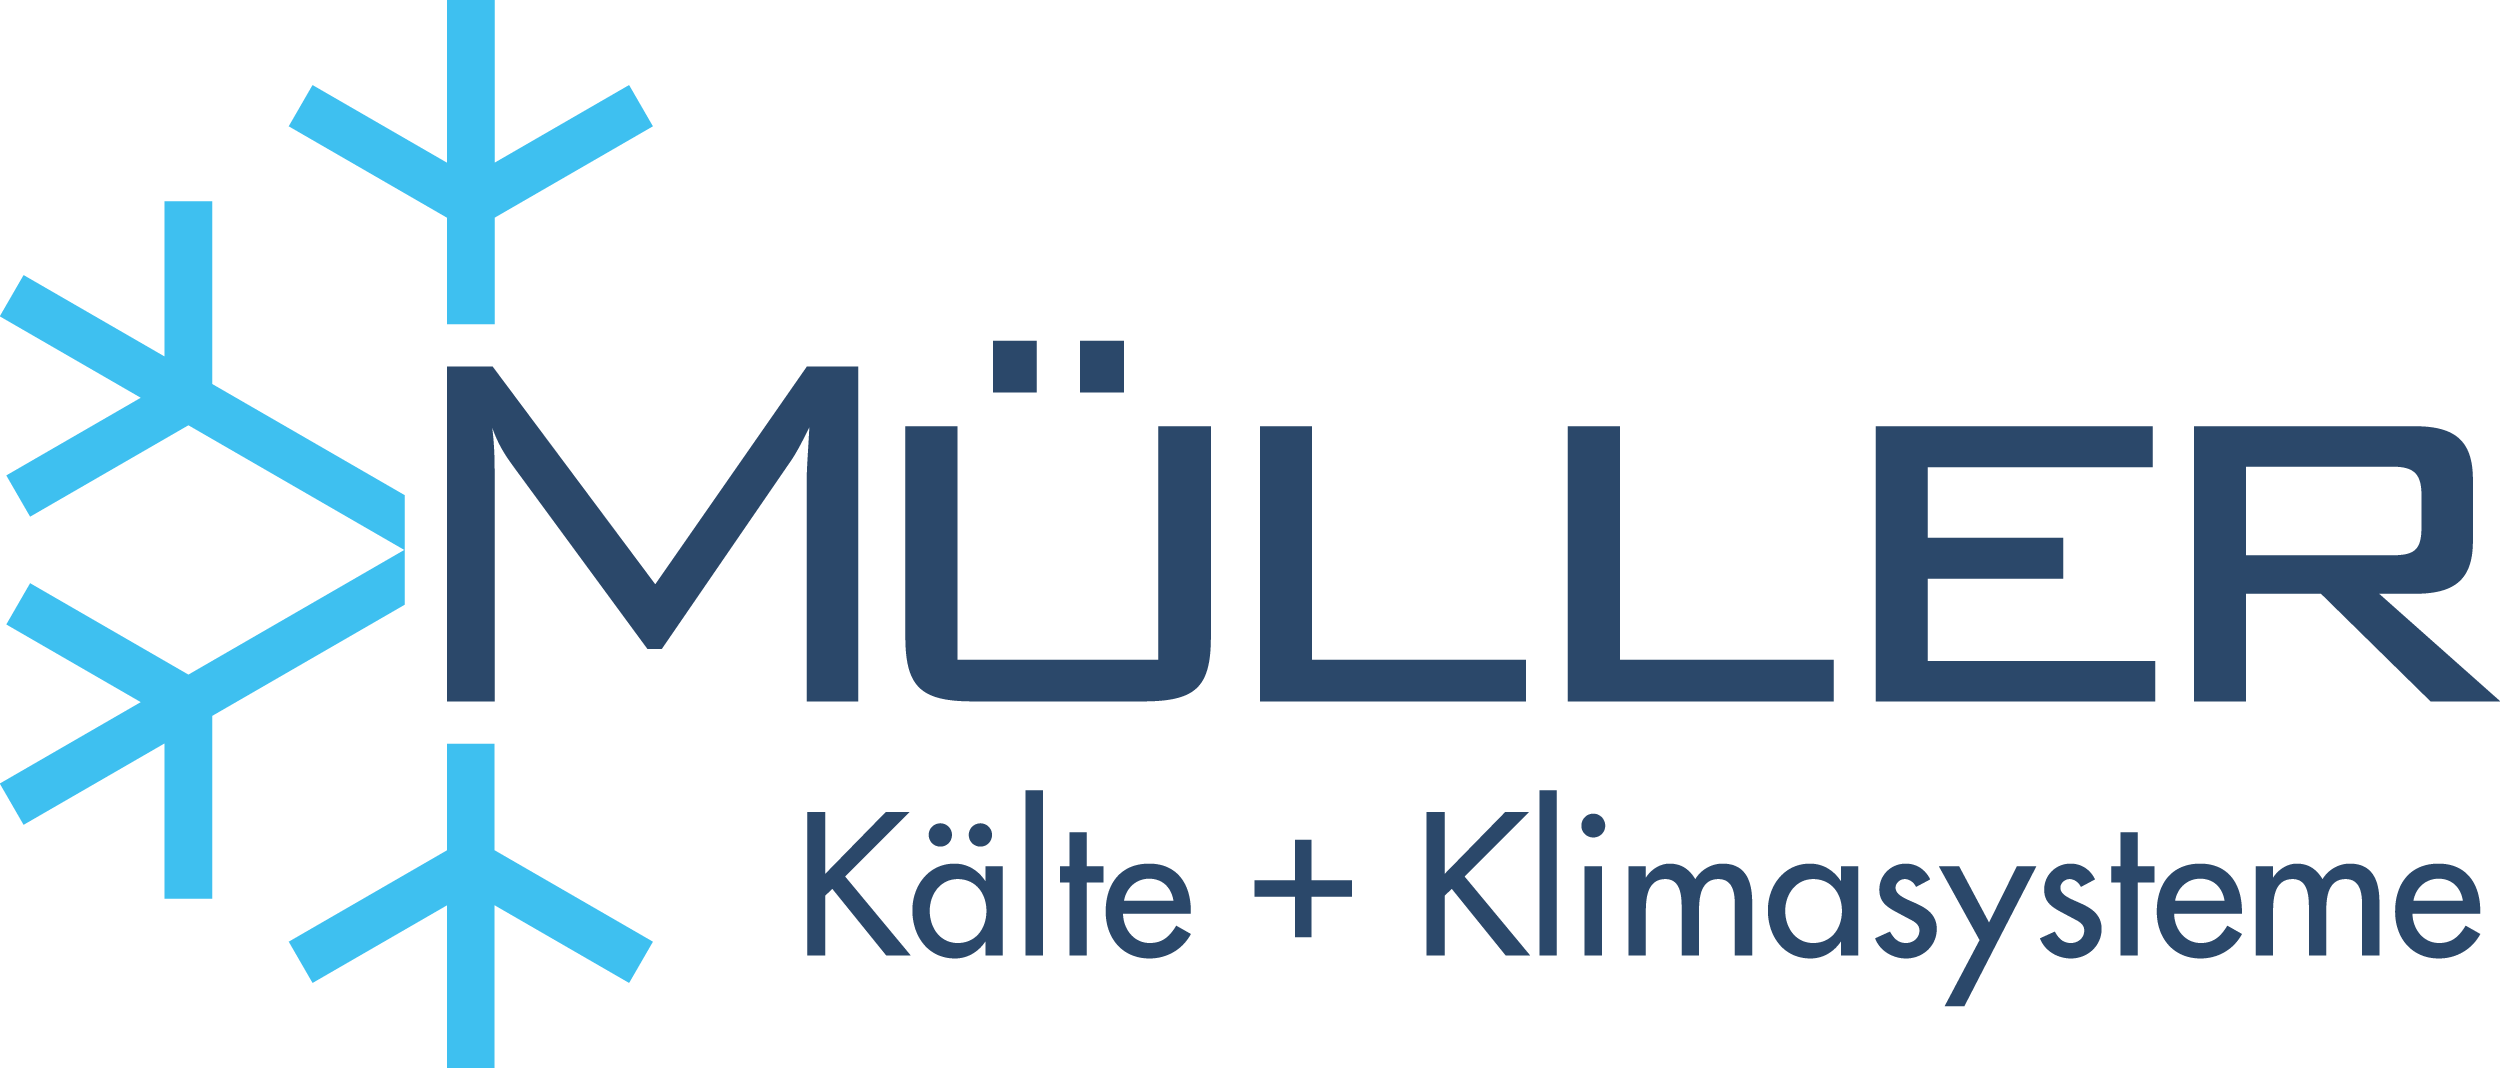 MÜLLER Kälte + Klimasysteme Logo